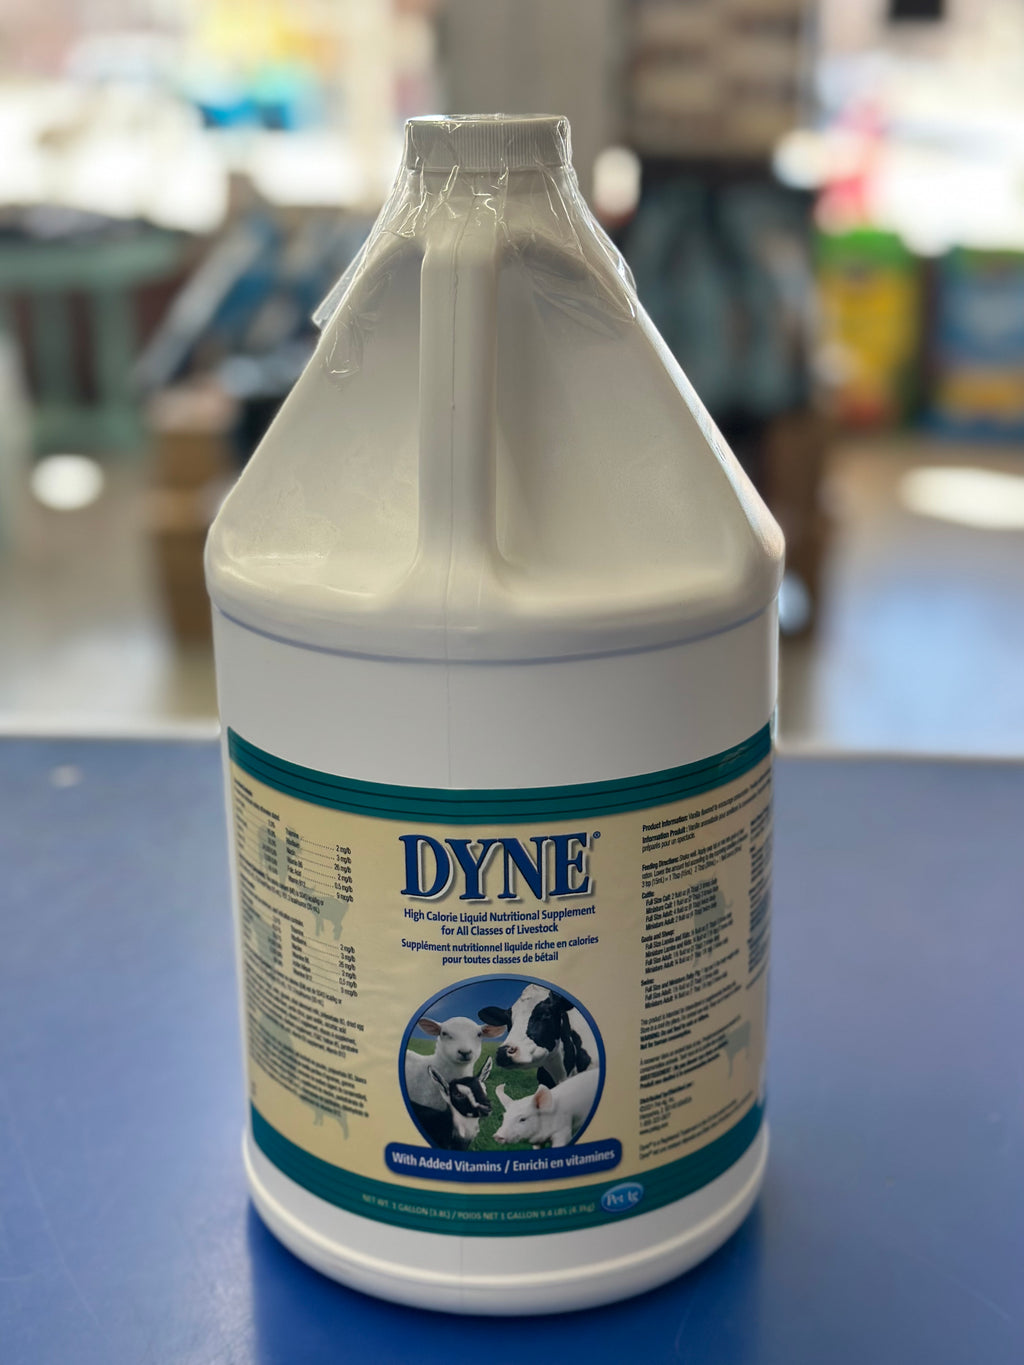 Dyne High Calorie Liquid Supplement Livestock – 56 CO